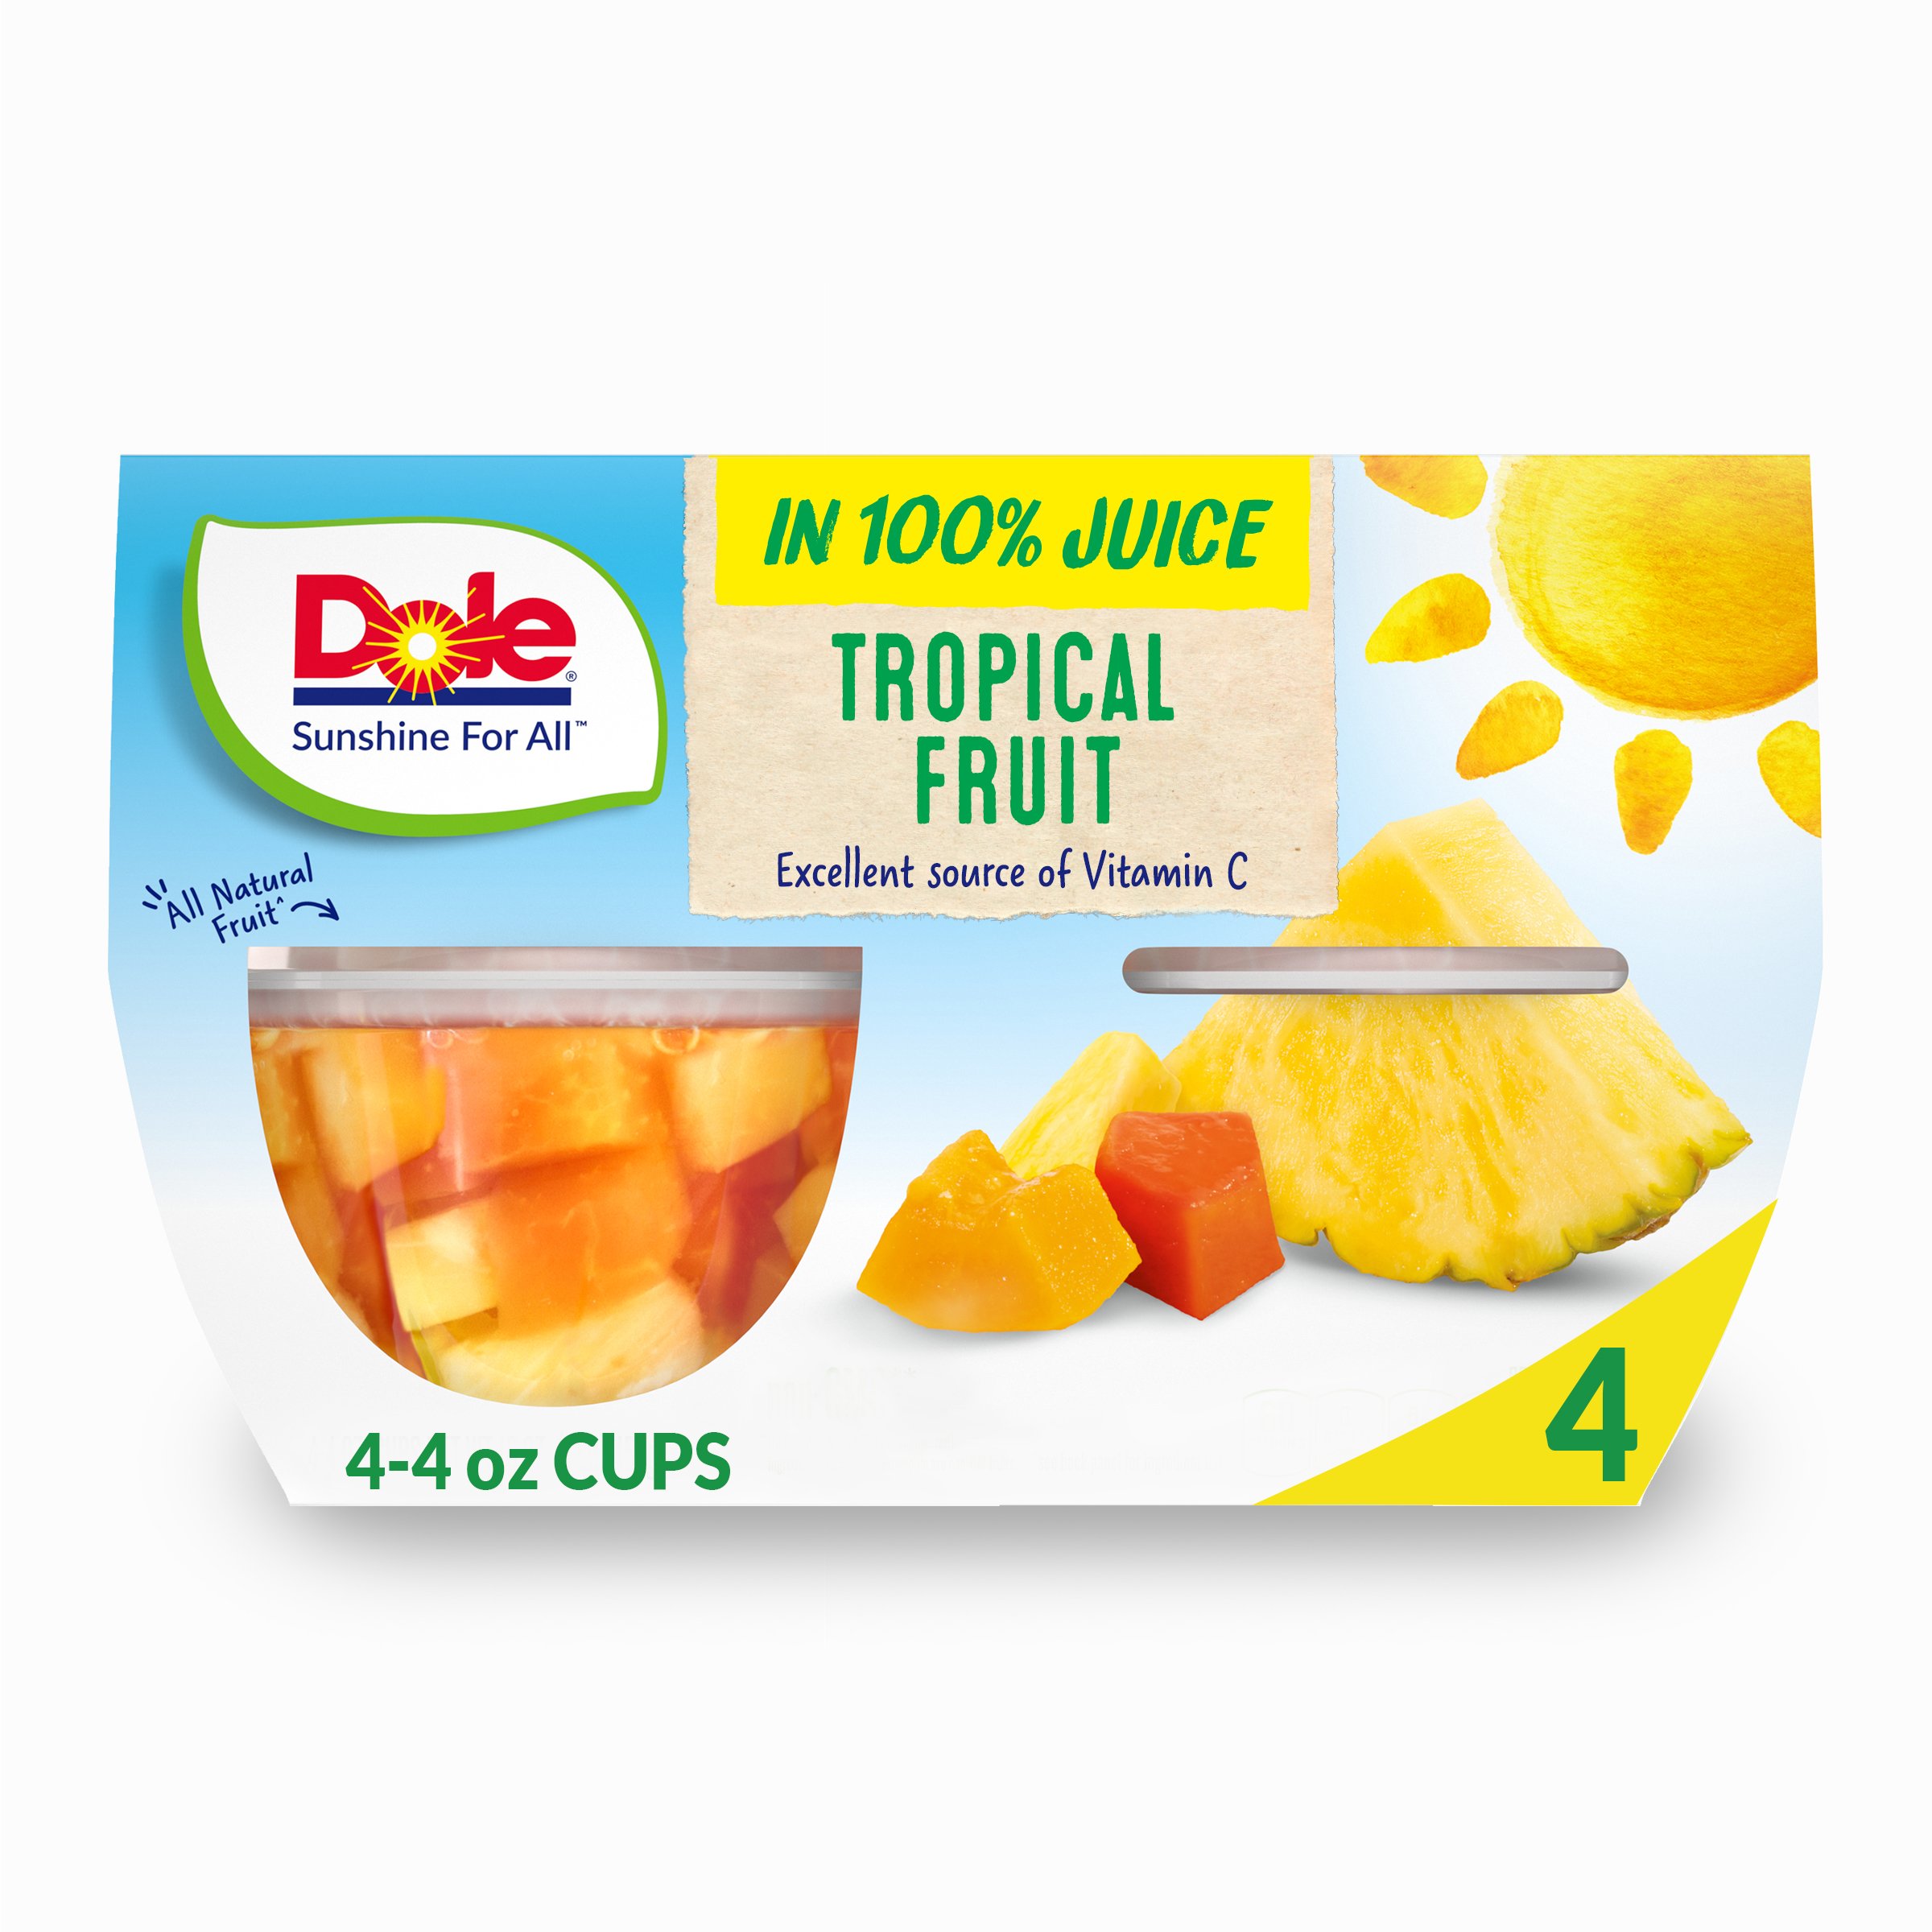 Dole Fruit Bowls - Tropical Fruit in 100% Juice - Shop Mixed Fruit at H-E-B